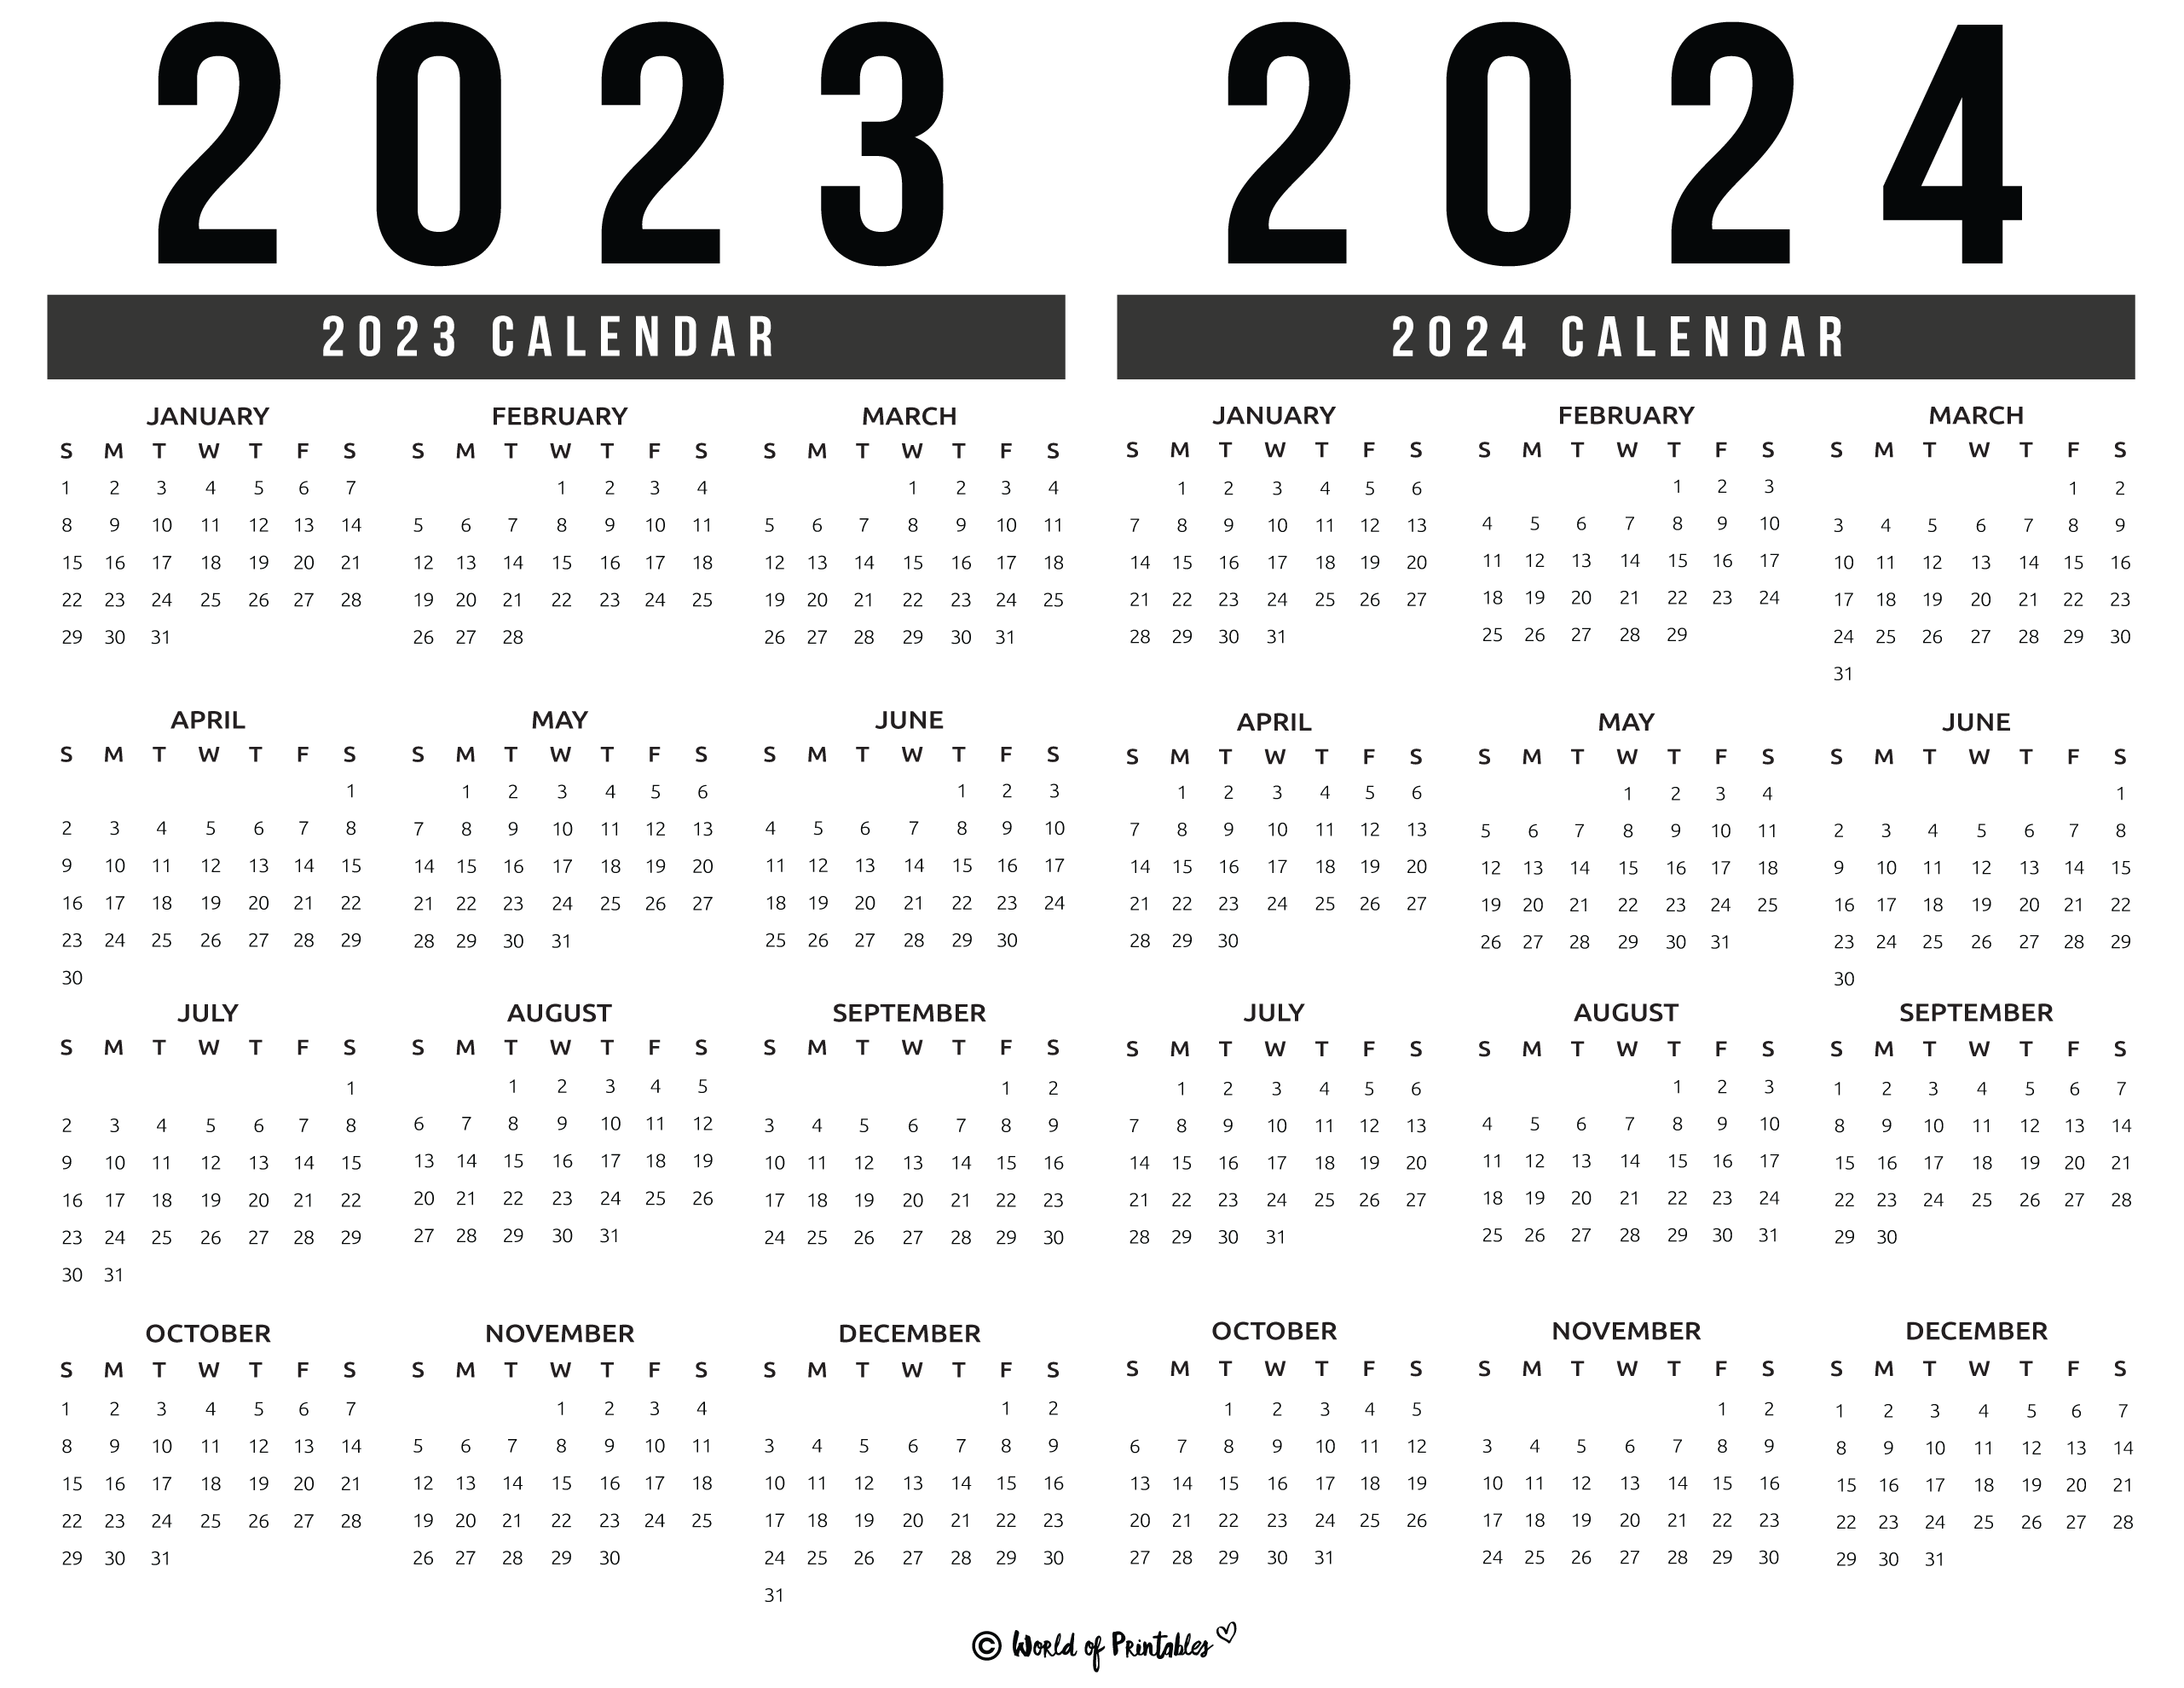 2023 2024 Calendar Free Printables - World Of Printables for 2023 And 2024 Free Printable Calendar